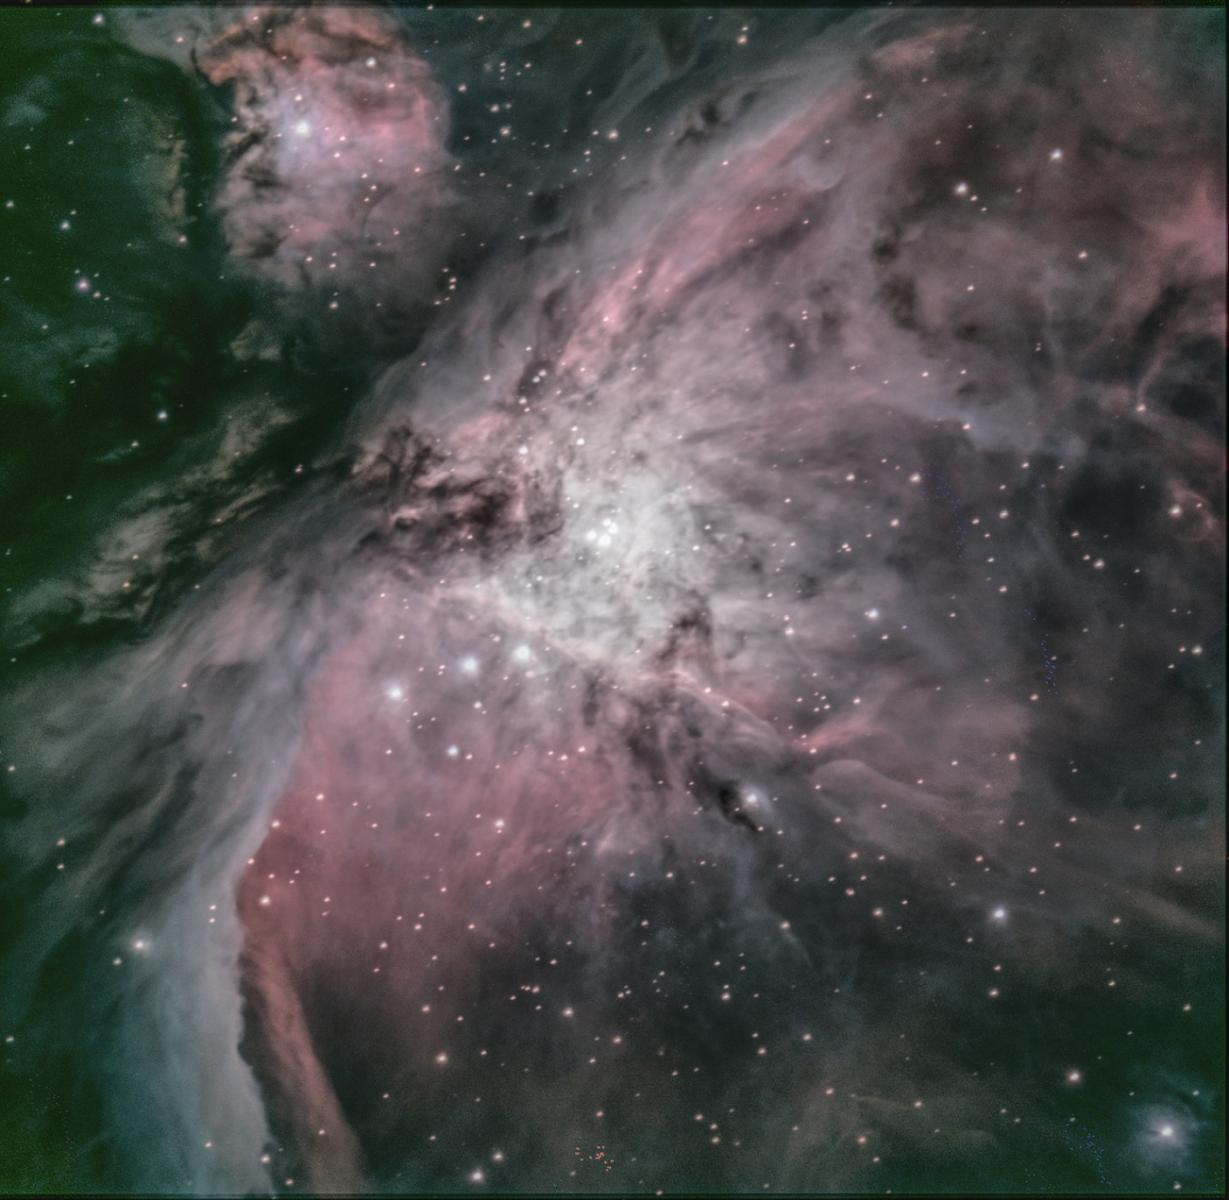 James Webb Telescope Discovers Orion Nebula Enigmas That 'Shouldn